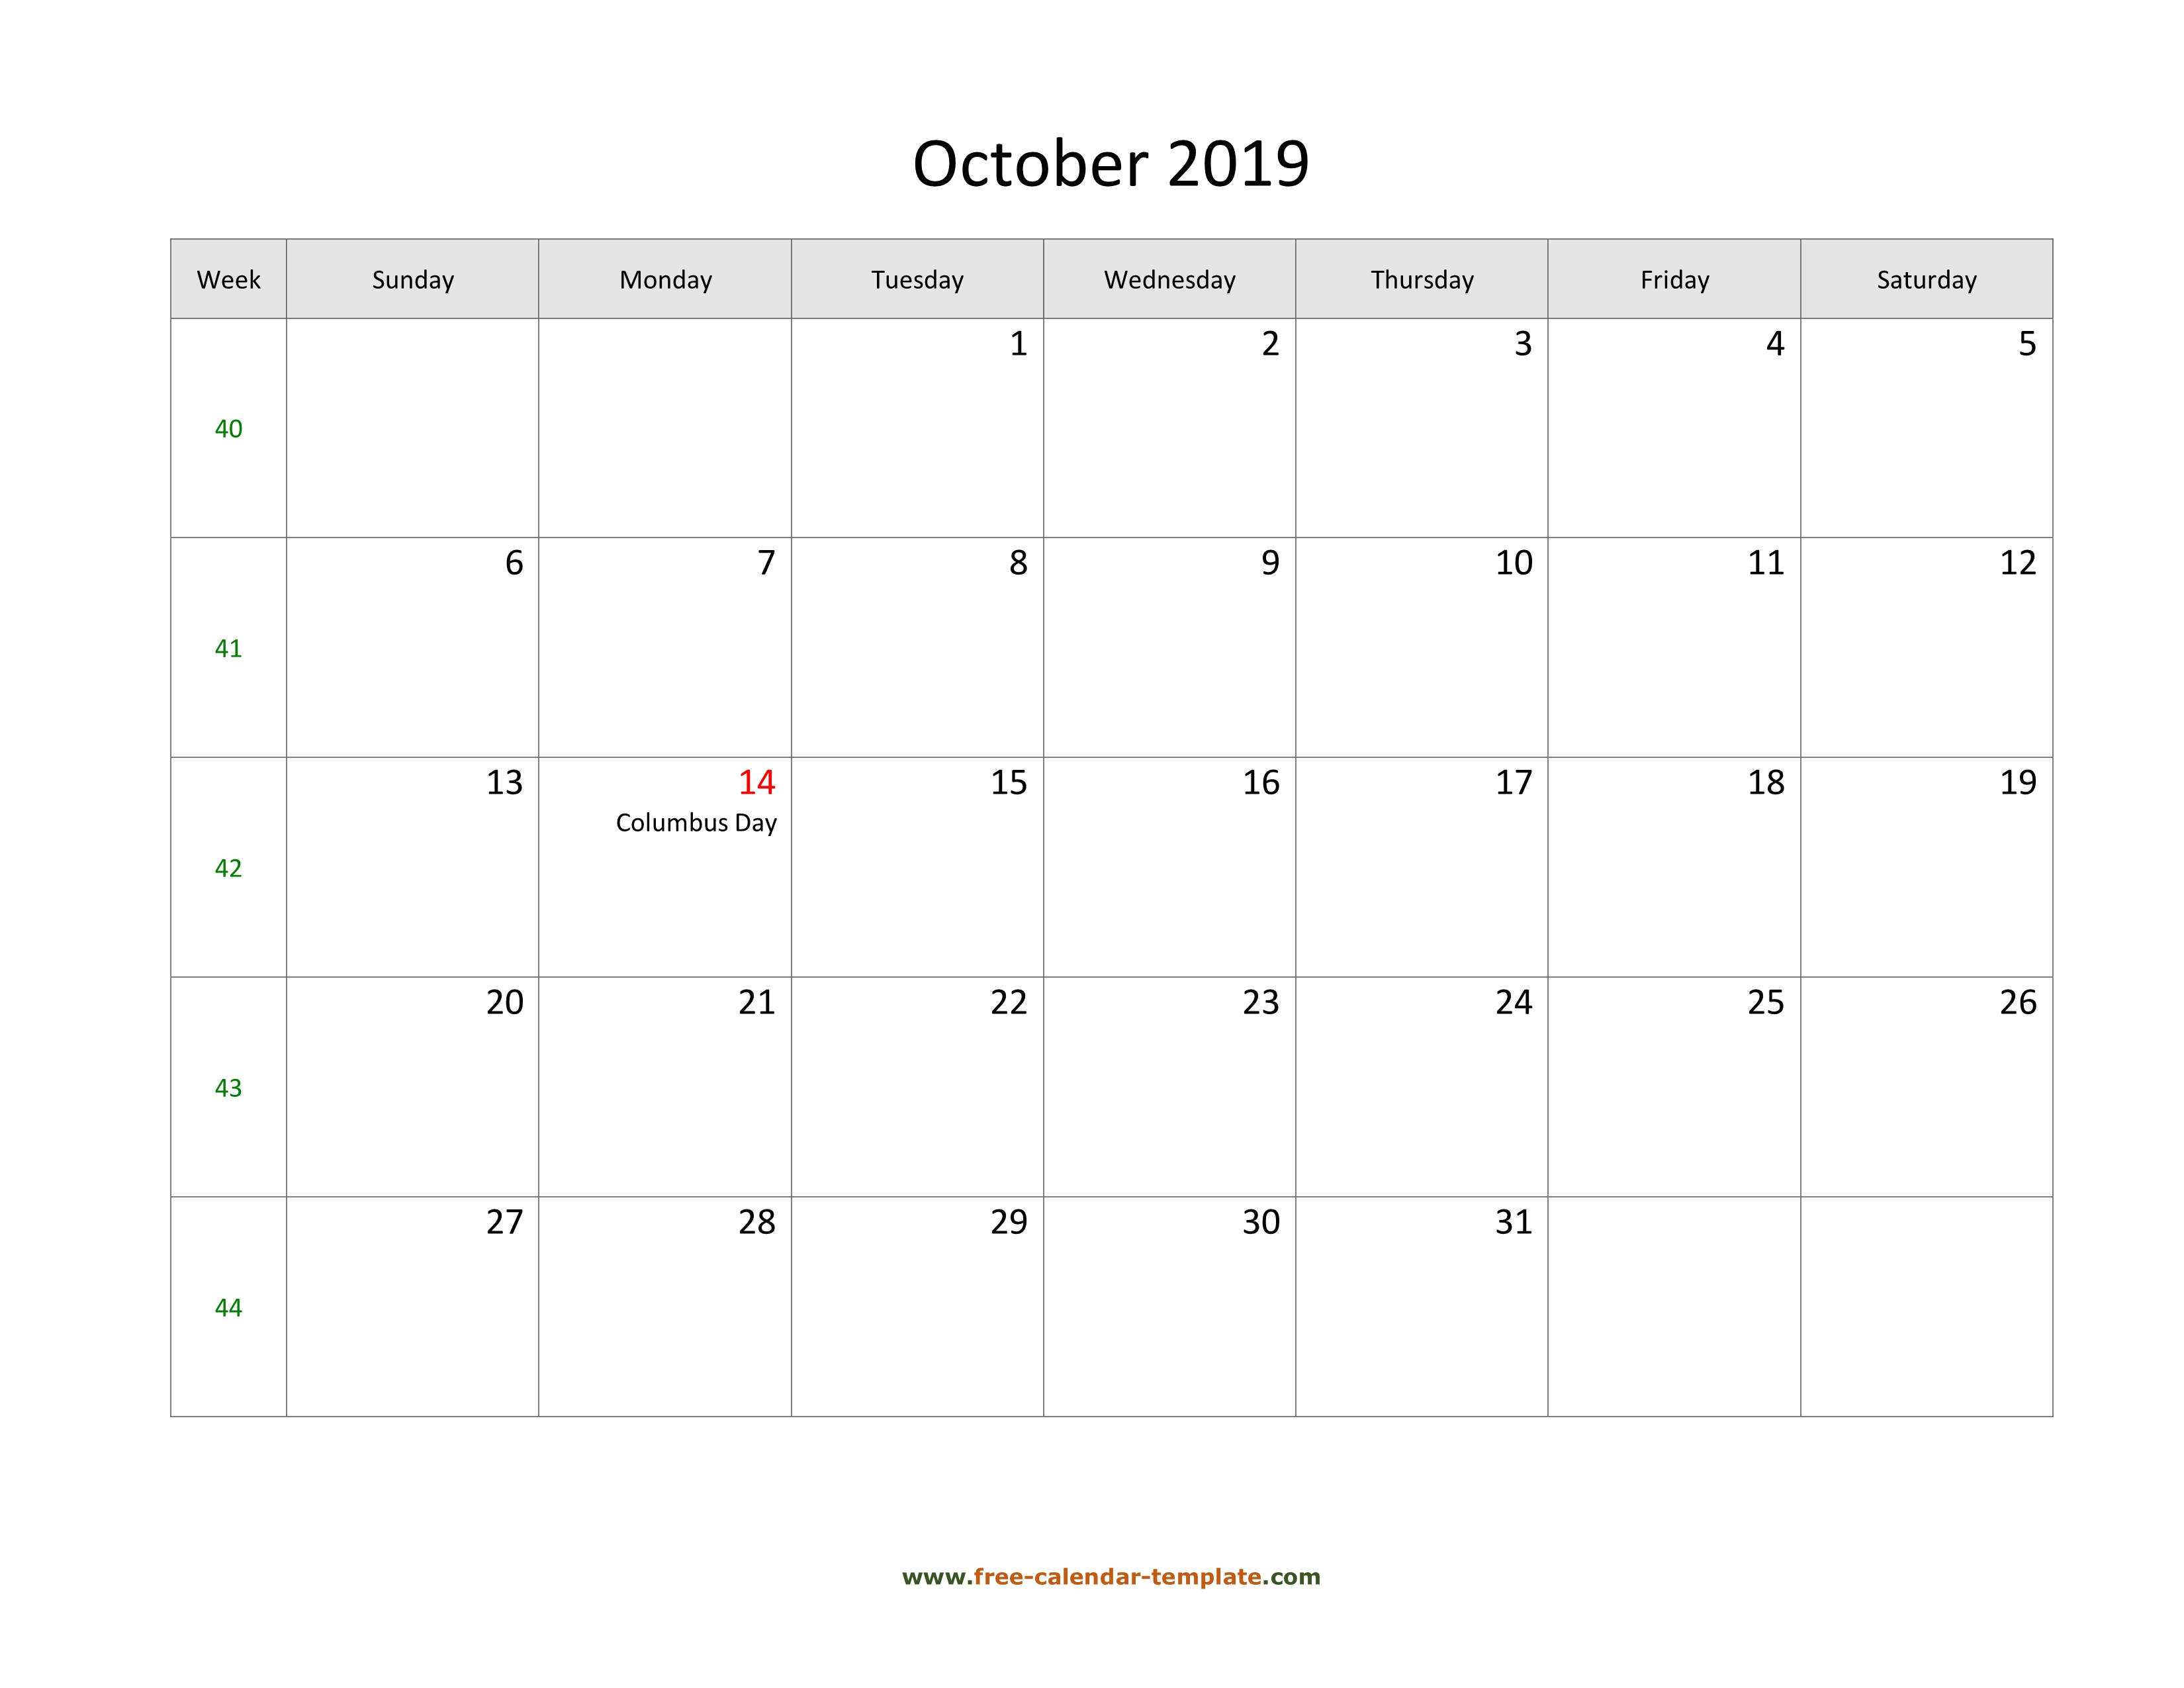 Free 2019 Calendar Blank October Template (Horizontal